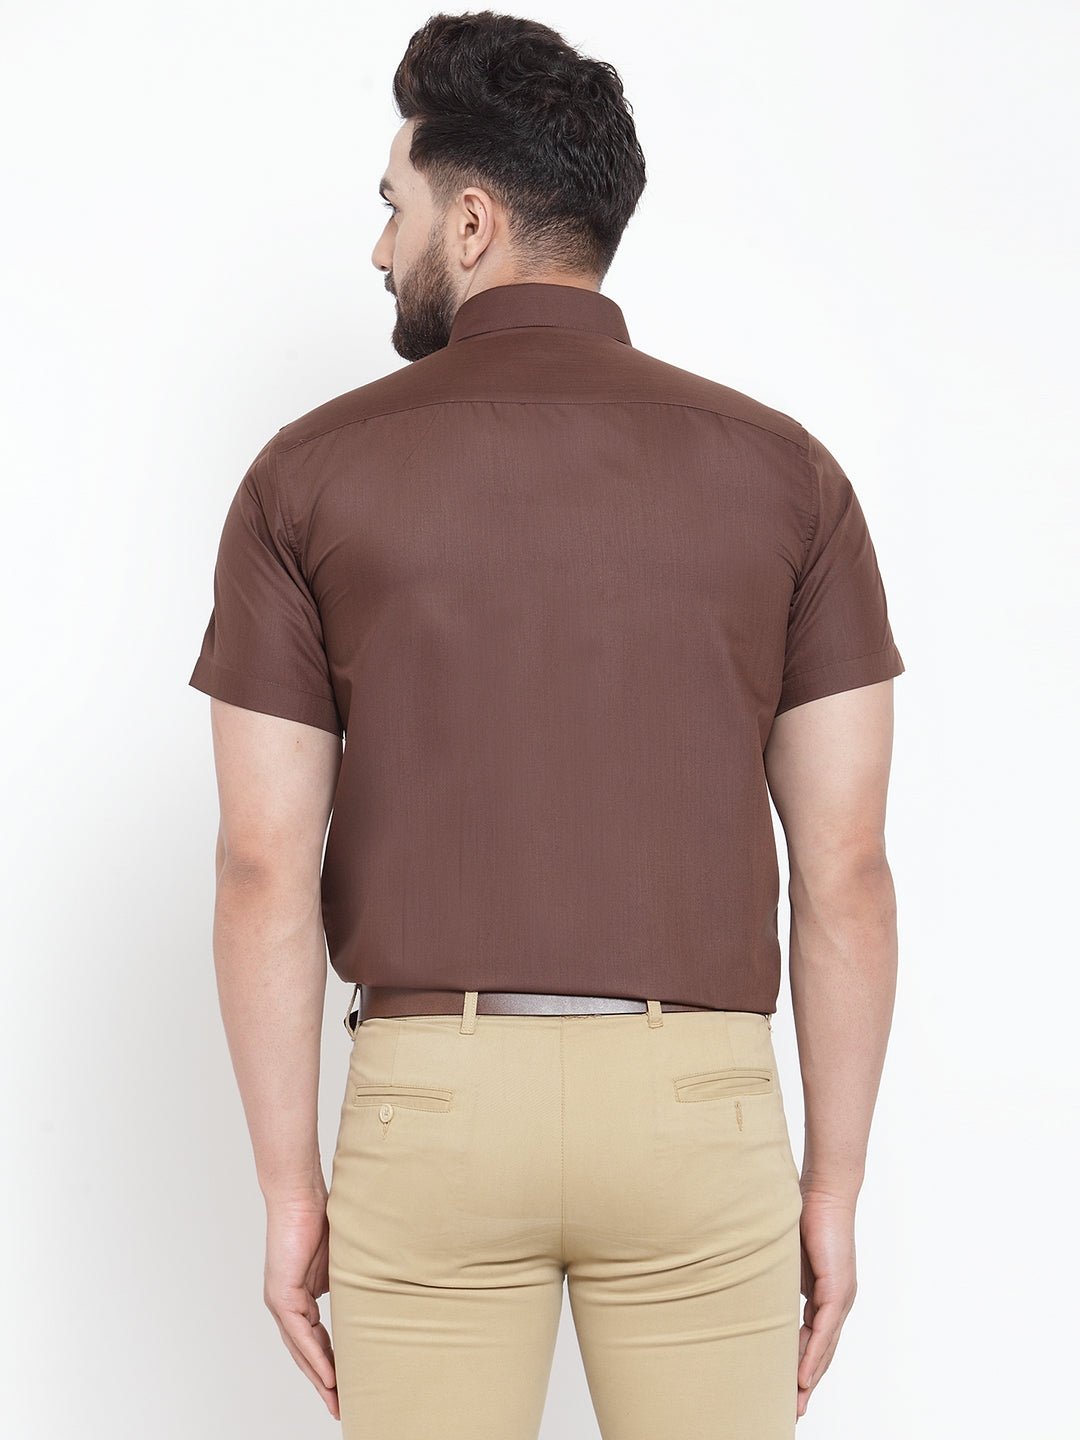 Men's Brown Cotton Half Sleeves Solid Formal Shirts ( SF 754Coffee ) - Jainish